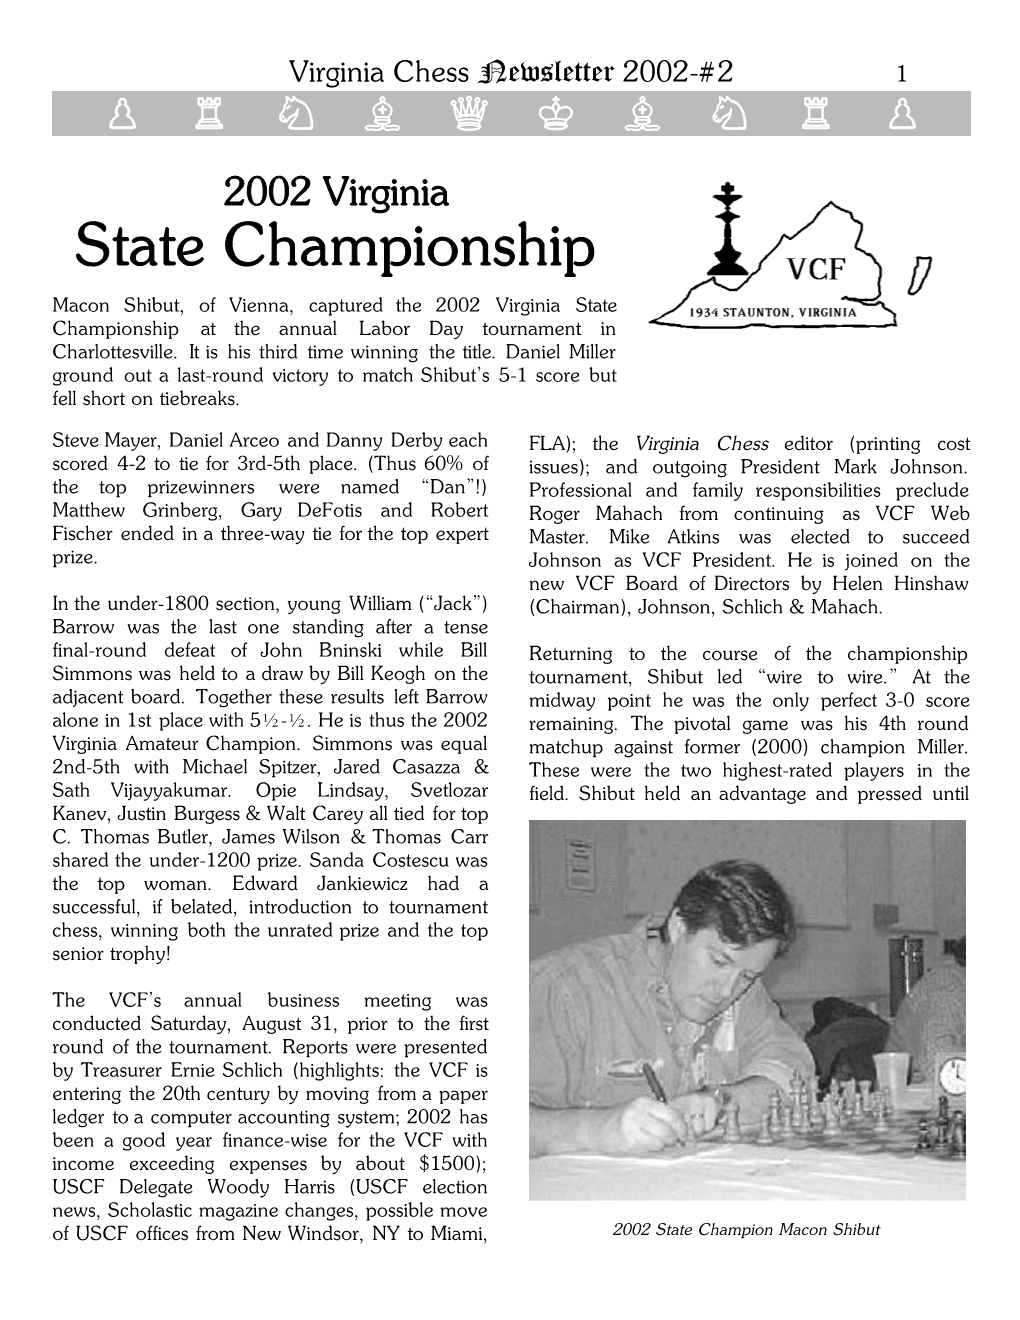 State Championship Macon Shibut, of Vienna, Captured the 2002 Virginia State Championship at the Annual Labor Day Tournament in Charlottesville